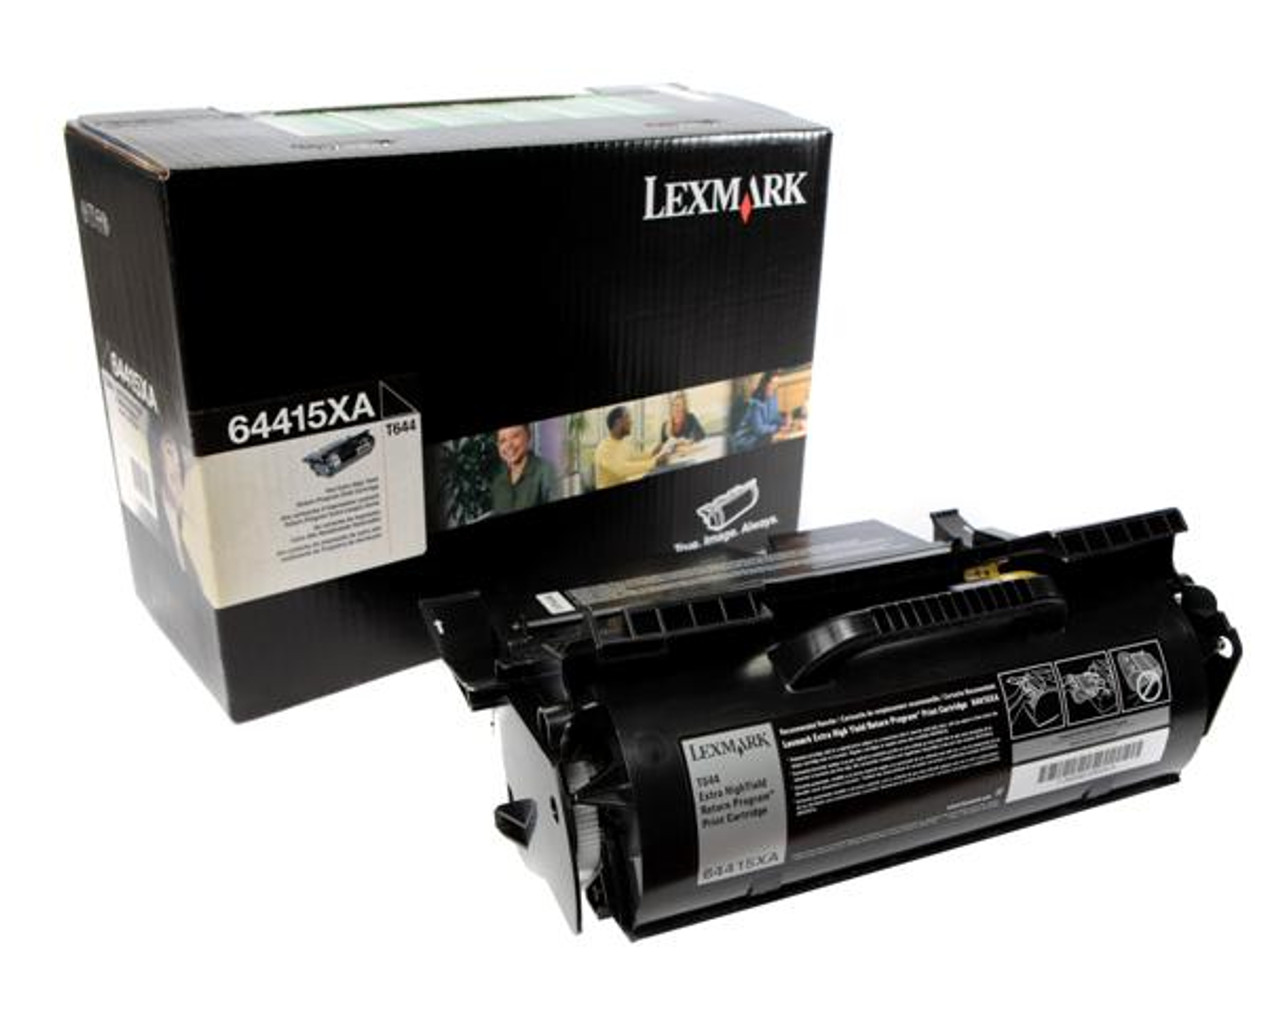 Lexmark T644 NEW Extra High Yield Toner | OEM#64415XA